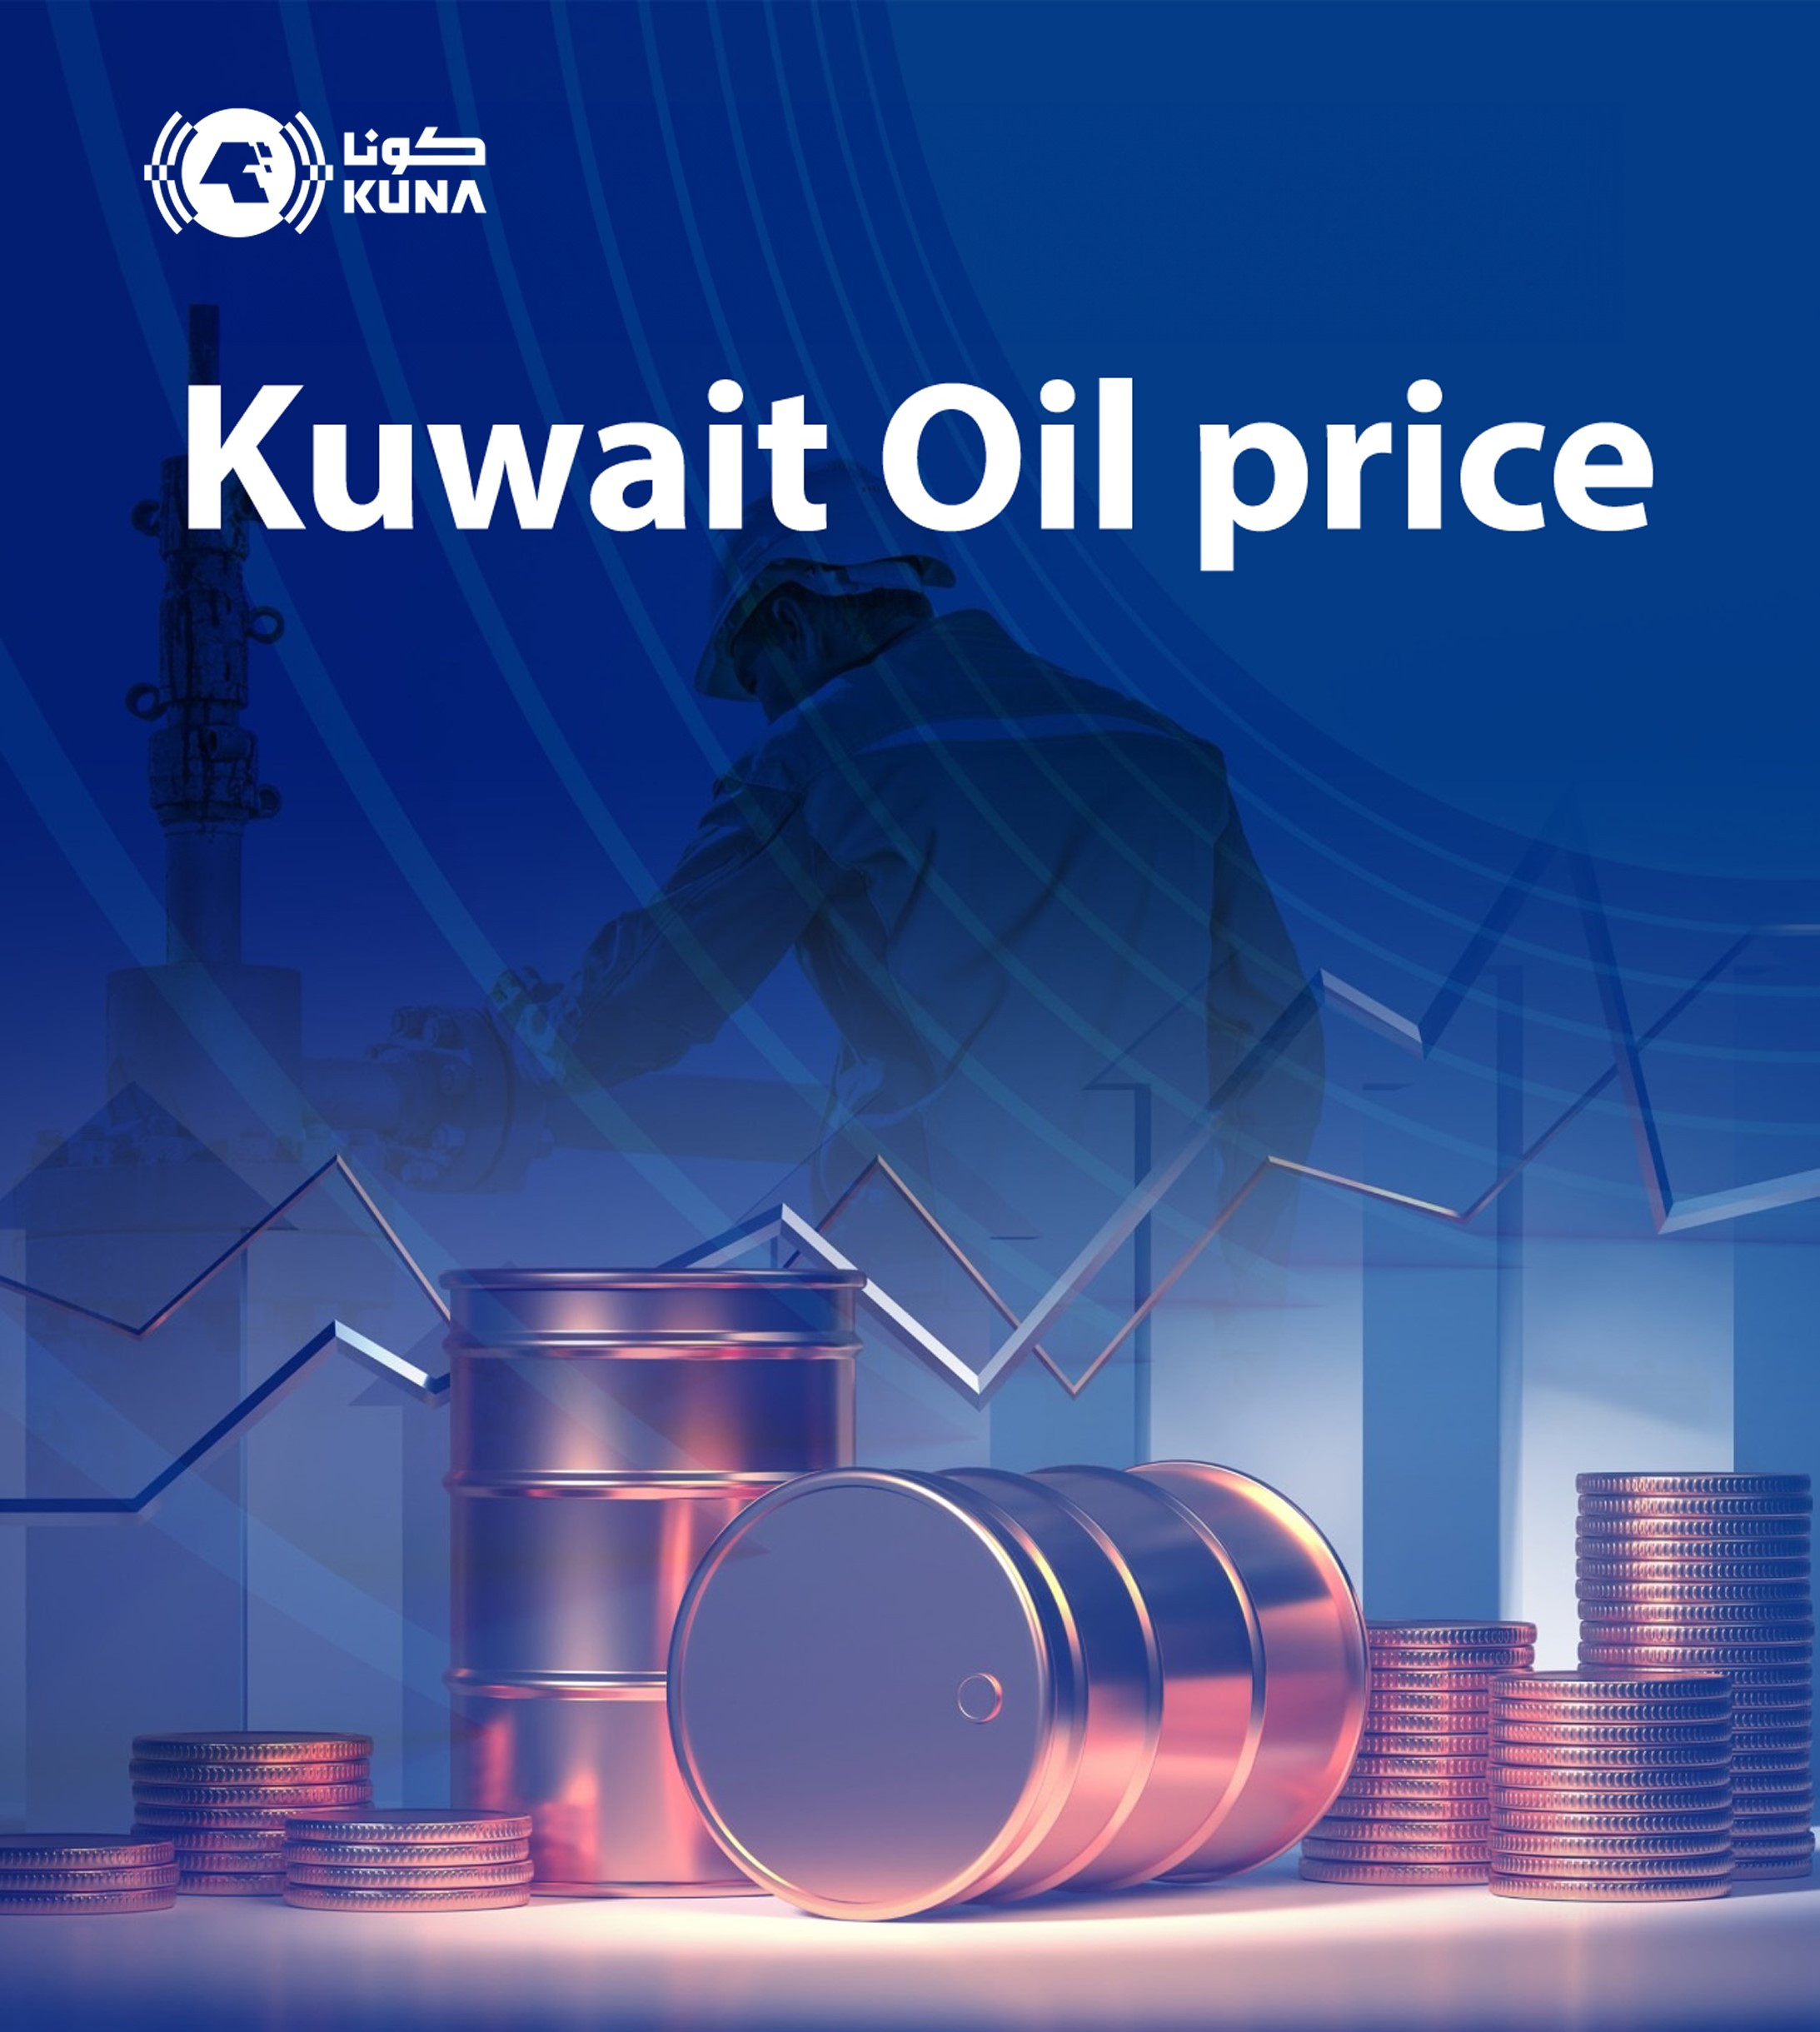 Kuwait oil price down 86 cents to USD 90.12 pb                                                                                                                                                                                                            